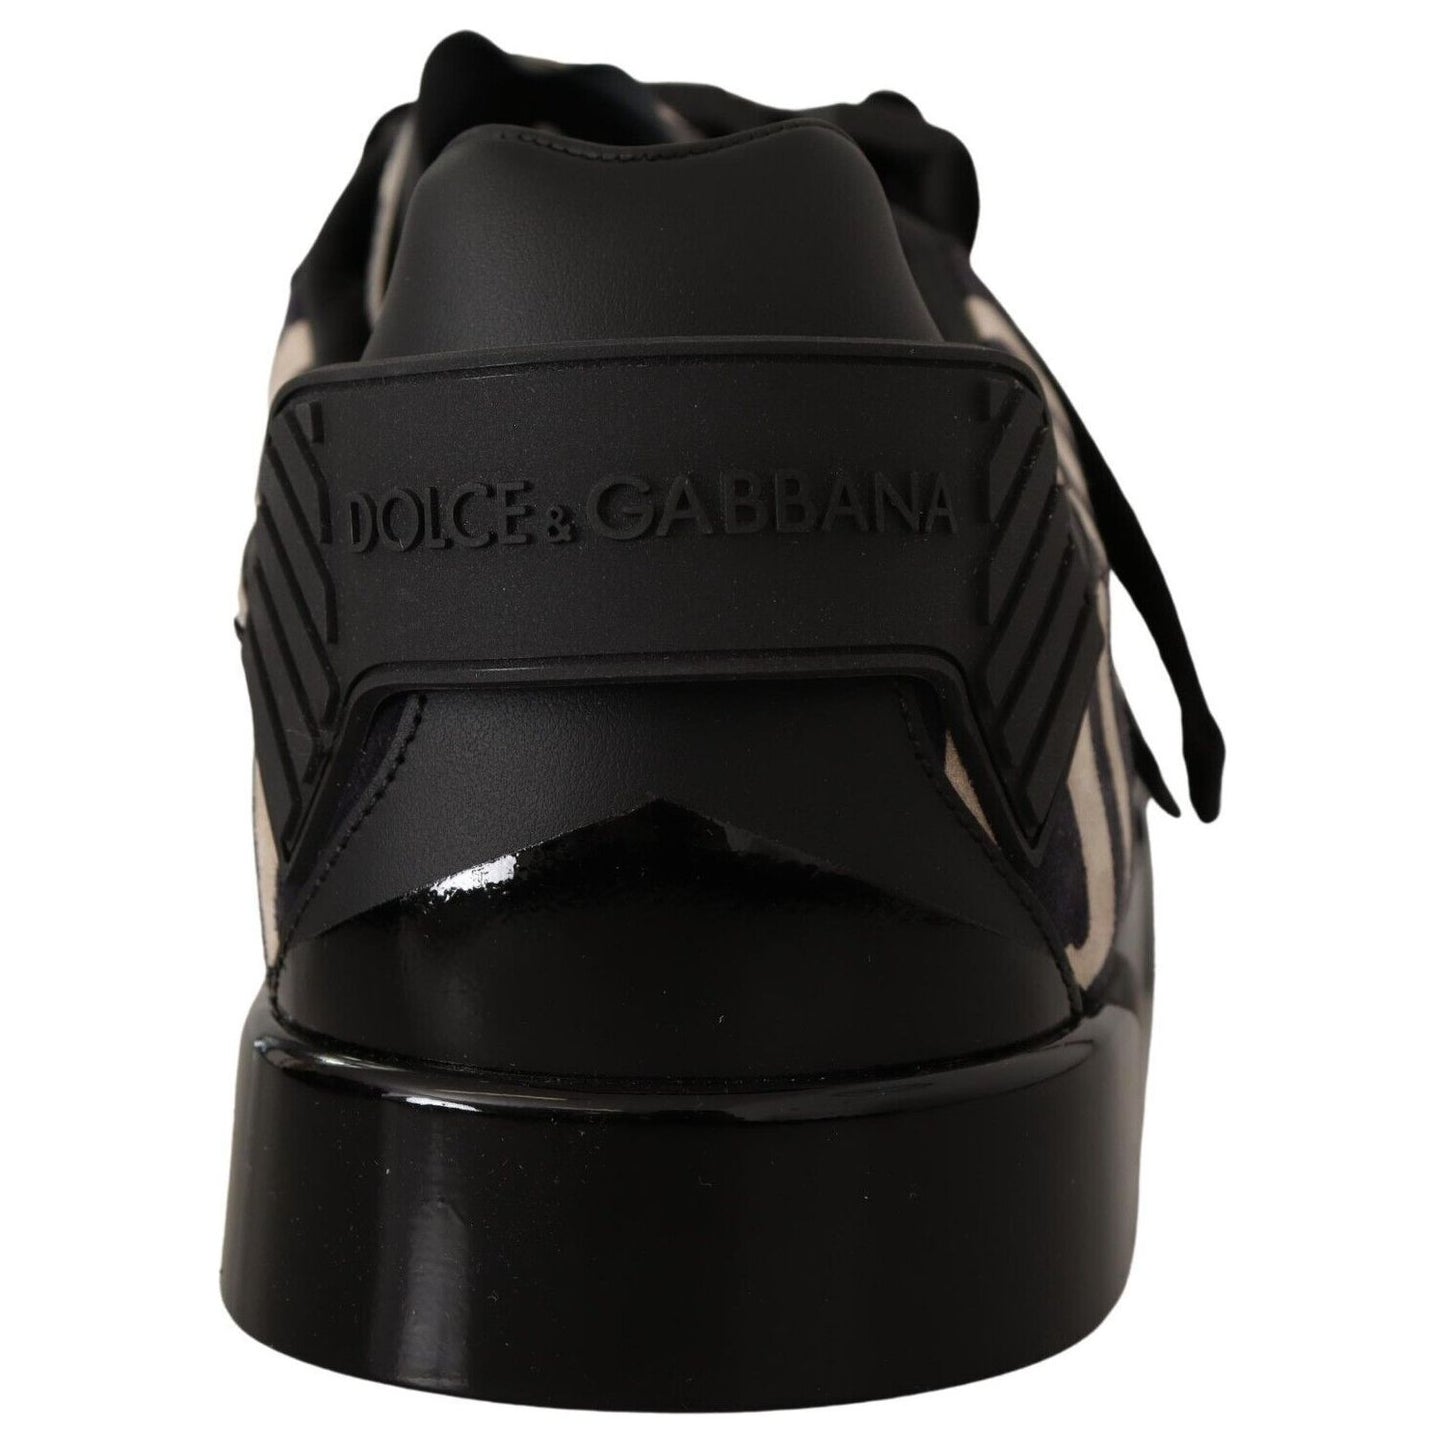 Dolce & Gabbana Zebra Suede Low Top Fashion Sneakers MAN SNEAKERS black-white-zebra-suede-rubber-sneakers-shoes-2 s-l1600-4-35-7c86e800-ff9.jpg